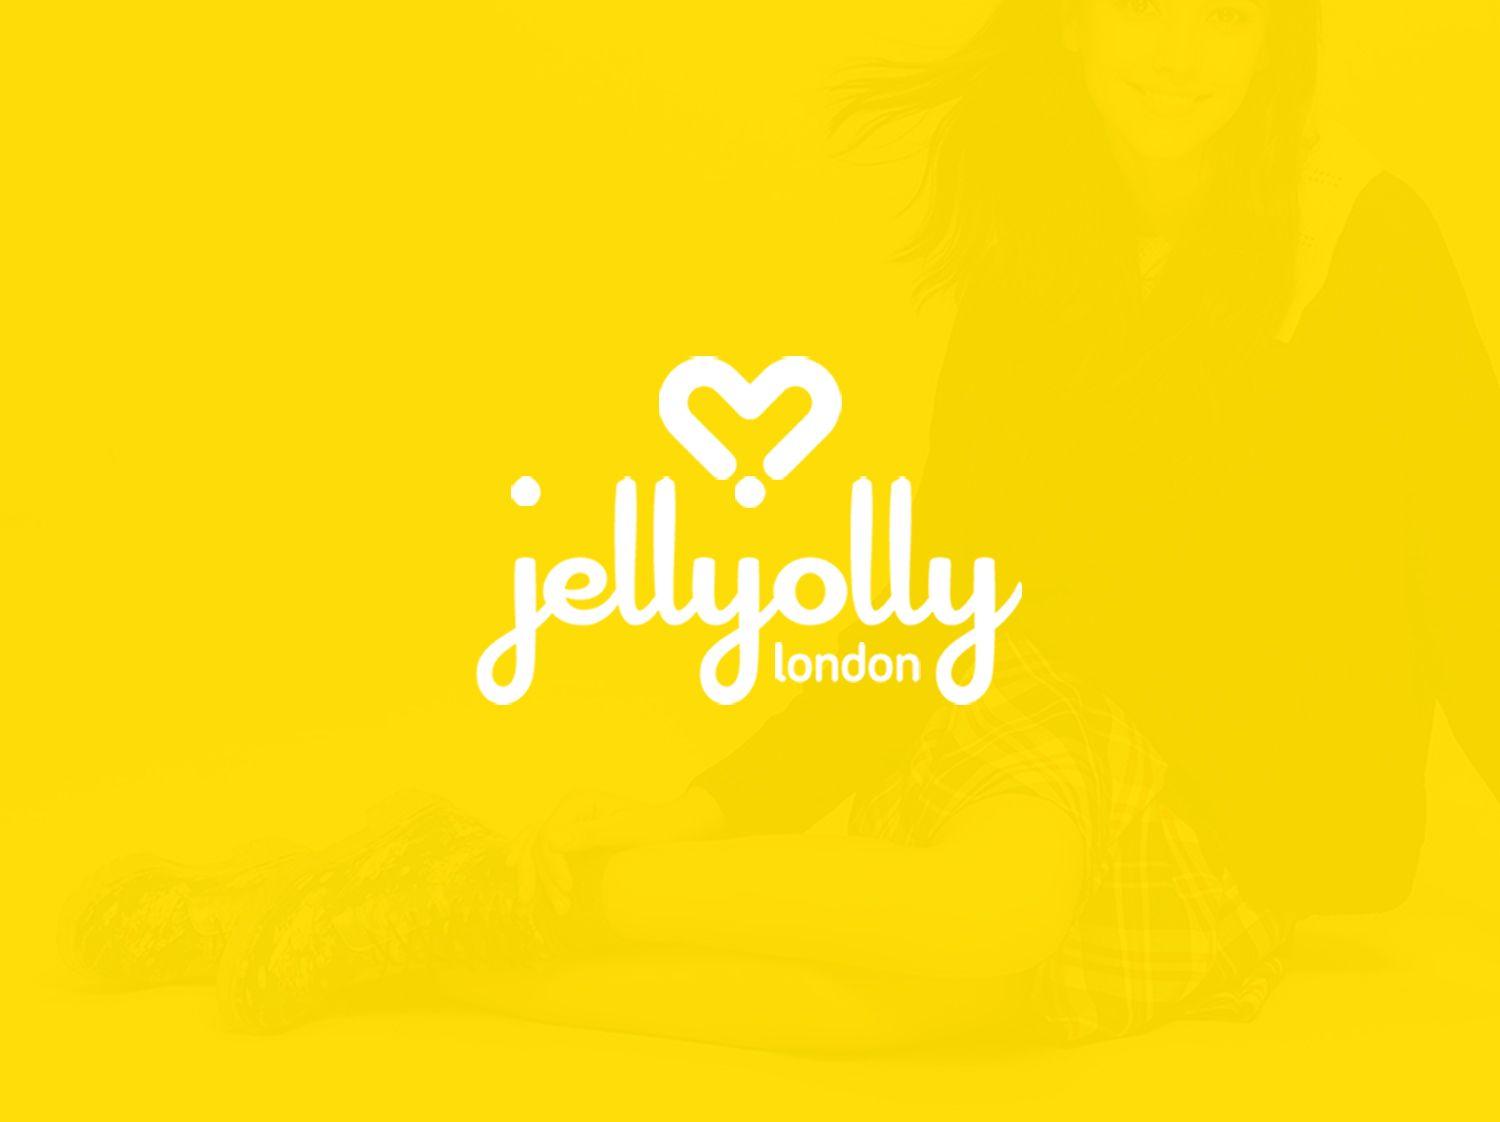 Jelly Logo - Jelly Jolly London branding and logo design | OM Studio London